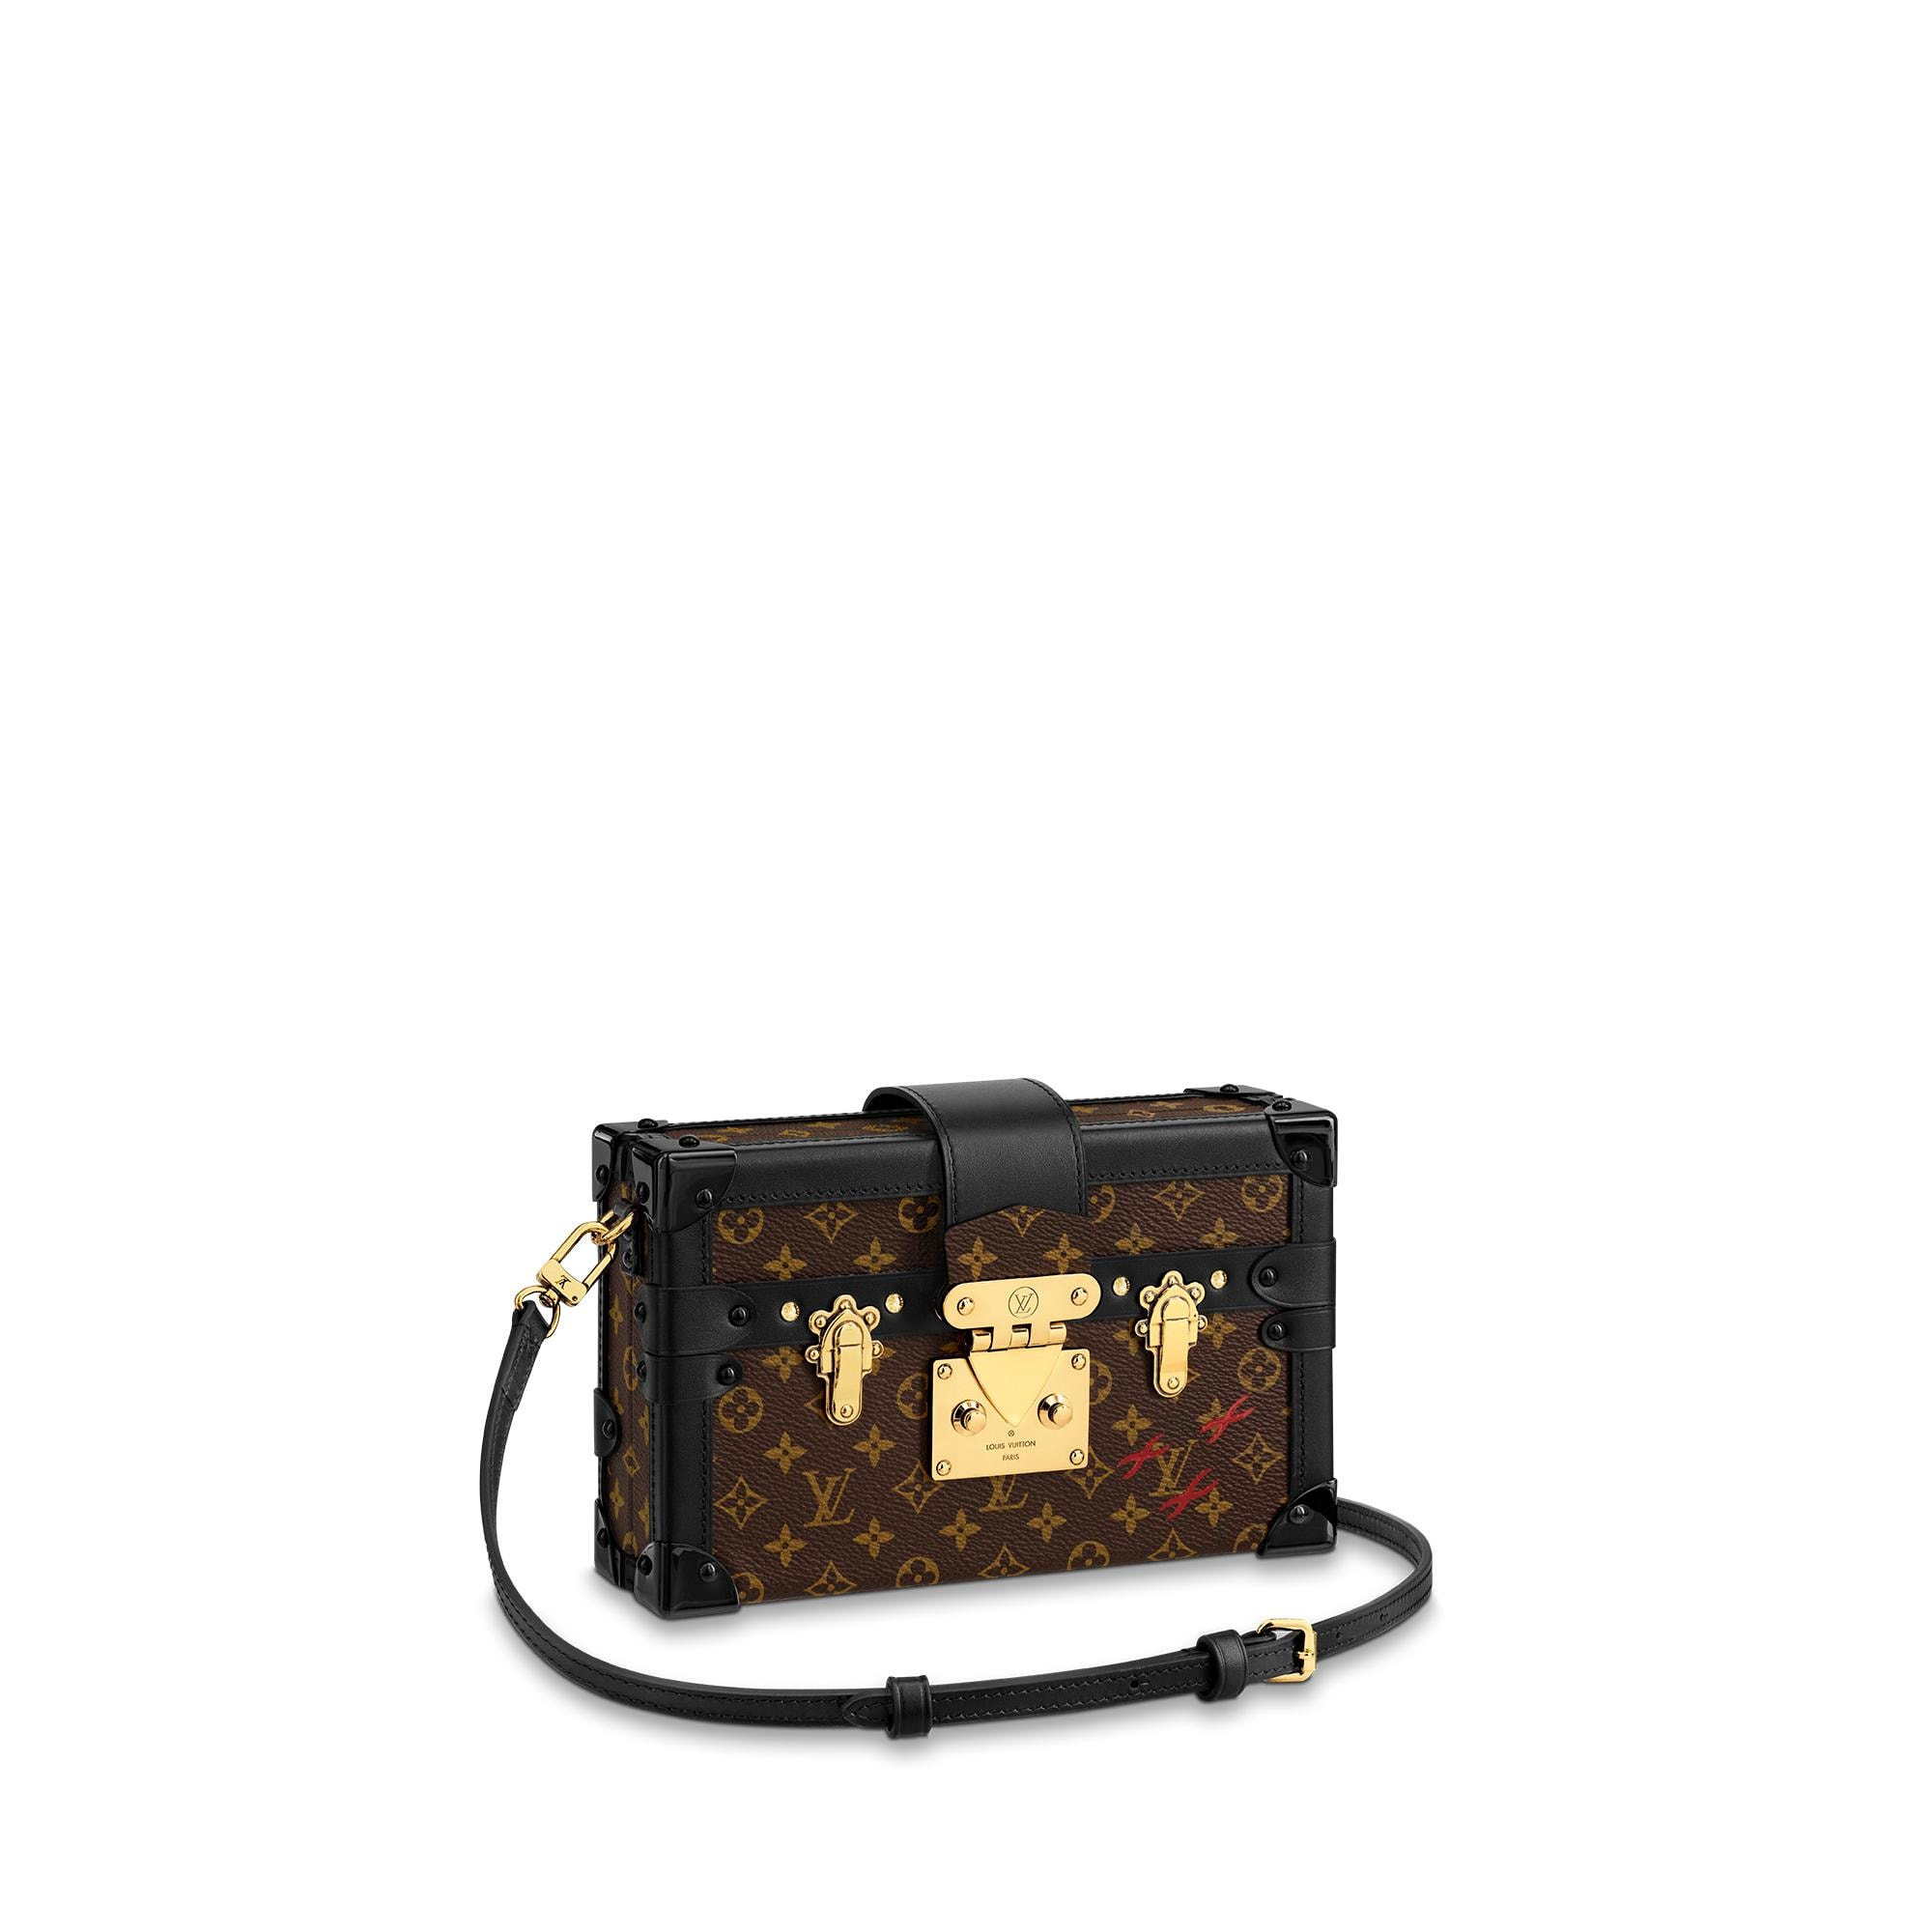 The Best Louis Vuitton Crossbody Bags - FifthAvenueGirl.com #lv